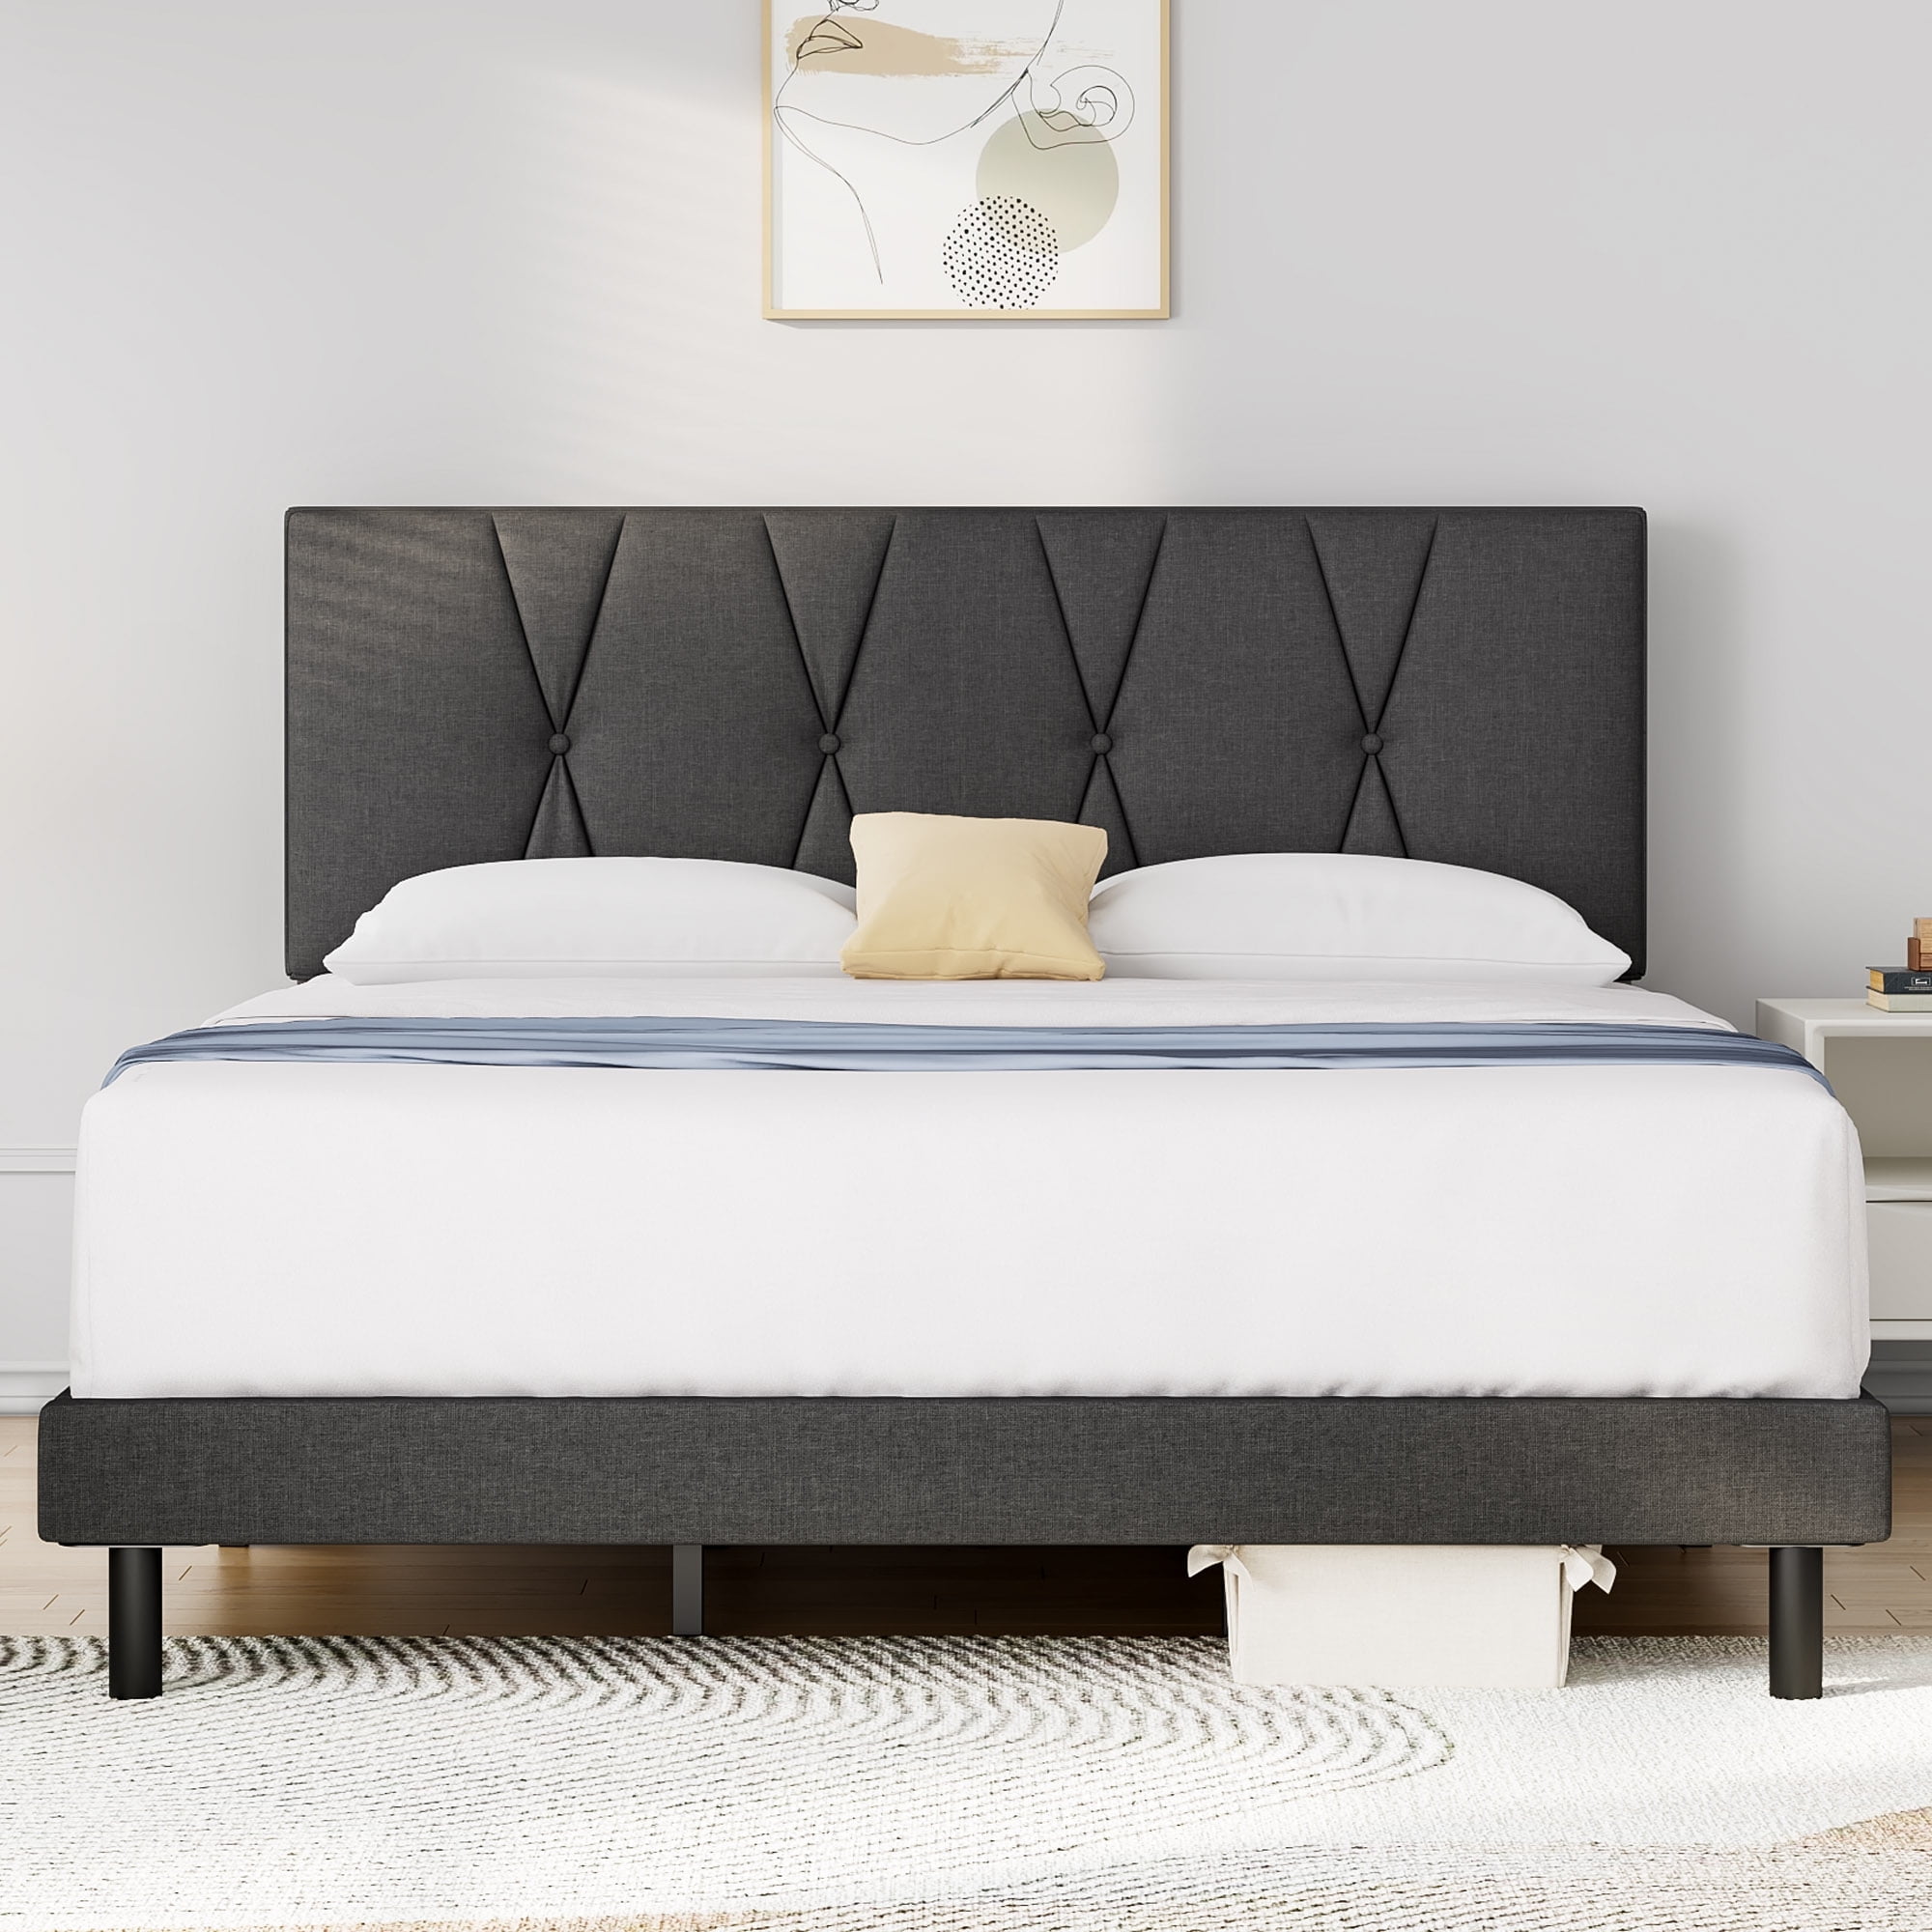 Queen Bed Frame, HAIIDE Queen Size Platform Bed With Fabric Upholstered Headboard, Dark Grey - image 1 of 7